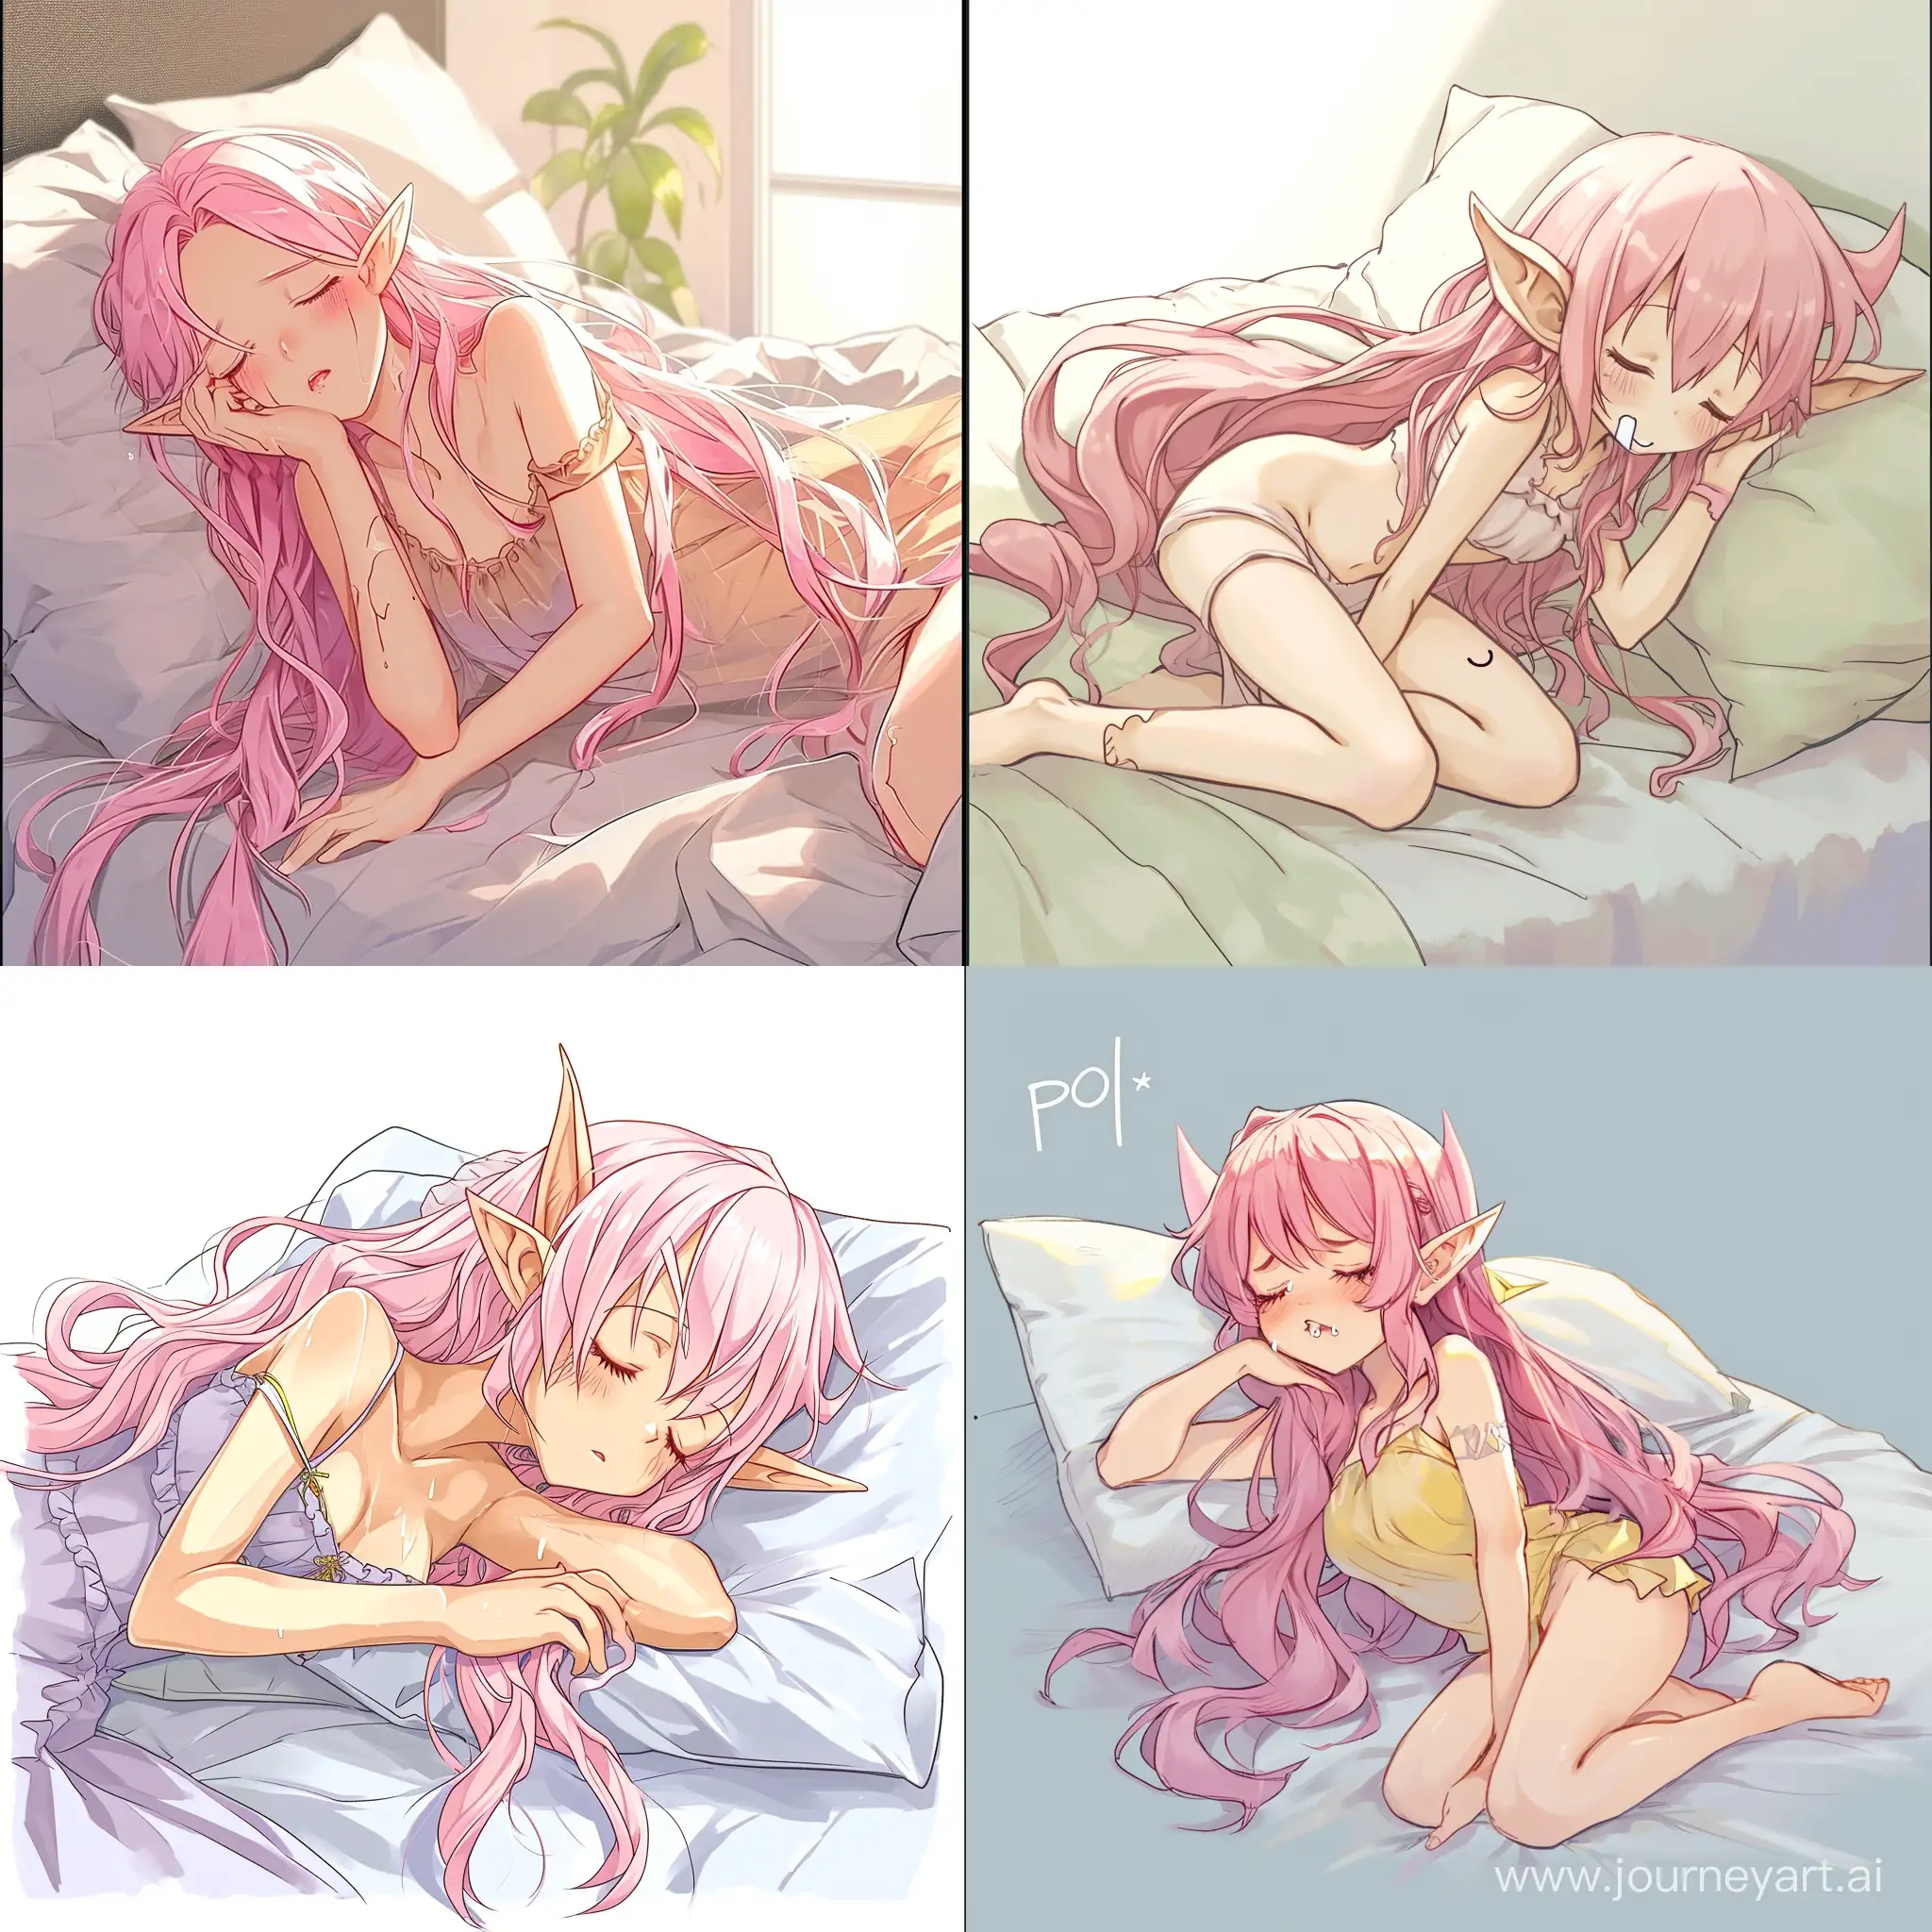 Adorable-PinkHaired-Anime-Girl-in-Carefree-Sleep-Pose